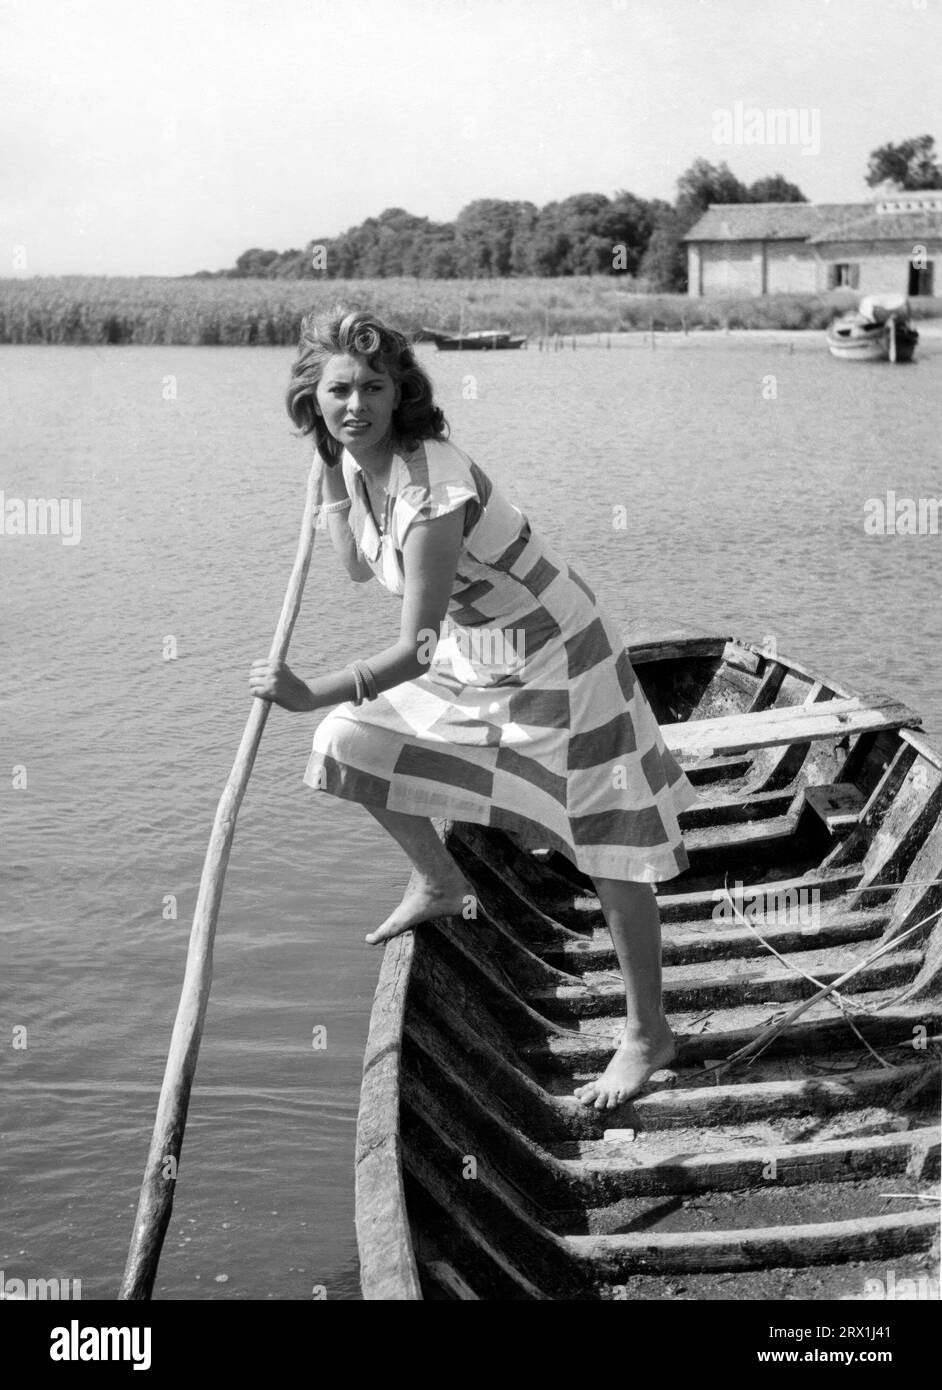 SOPHIA LOREN in THE RIVER GIRL (1955) -Original title: LA DONNA DEL FIUME-, directed by MARIO SOLDATI. Credit: PONTI-DE LAURENTIIS CINEMATOGRAFICA / Album Stock Photo